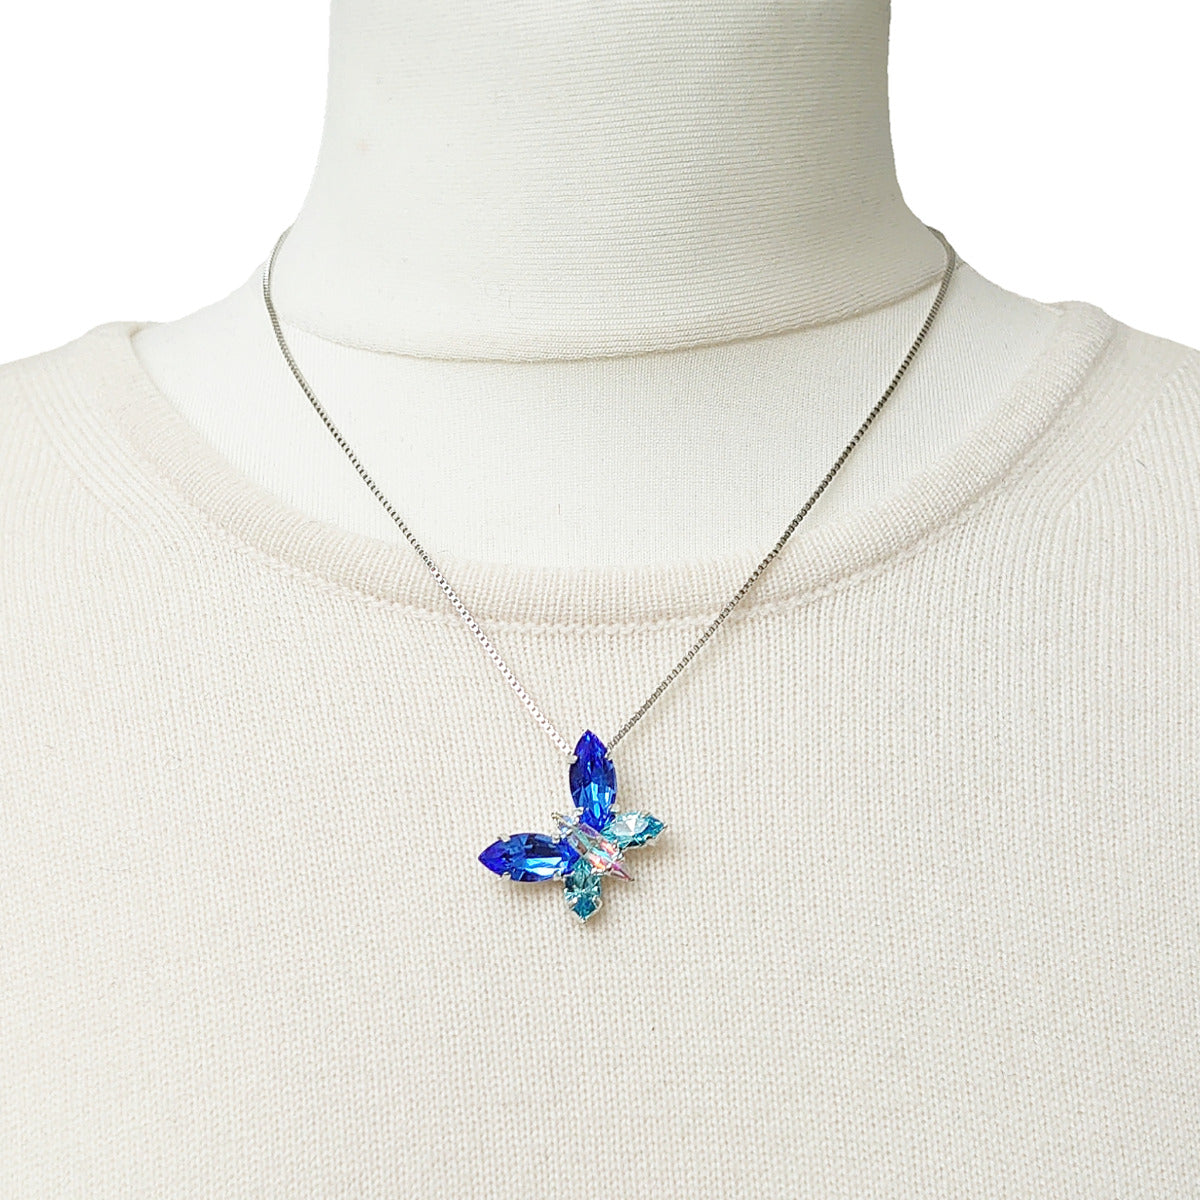 Butterfly Pendant - Blue (Silver) - Swarovski Crystals